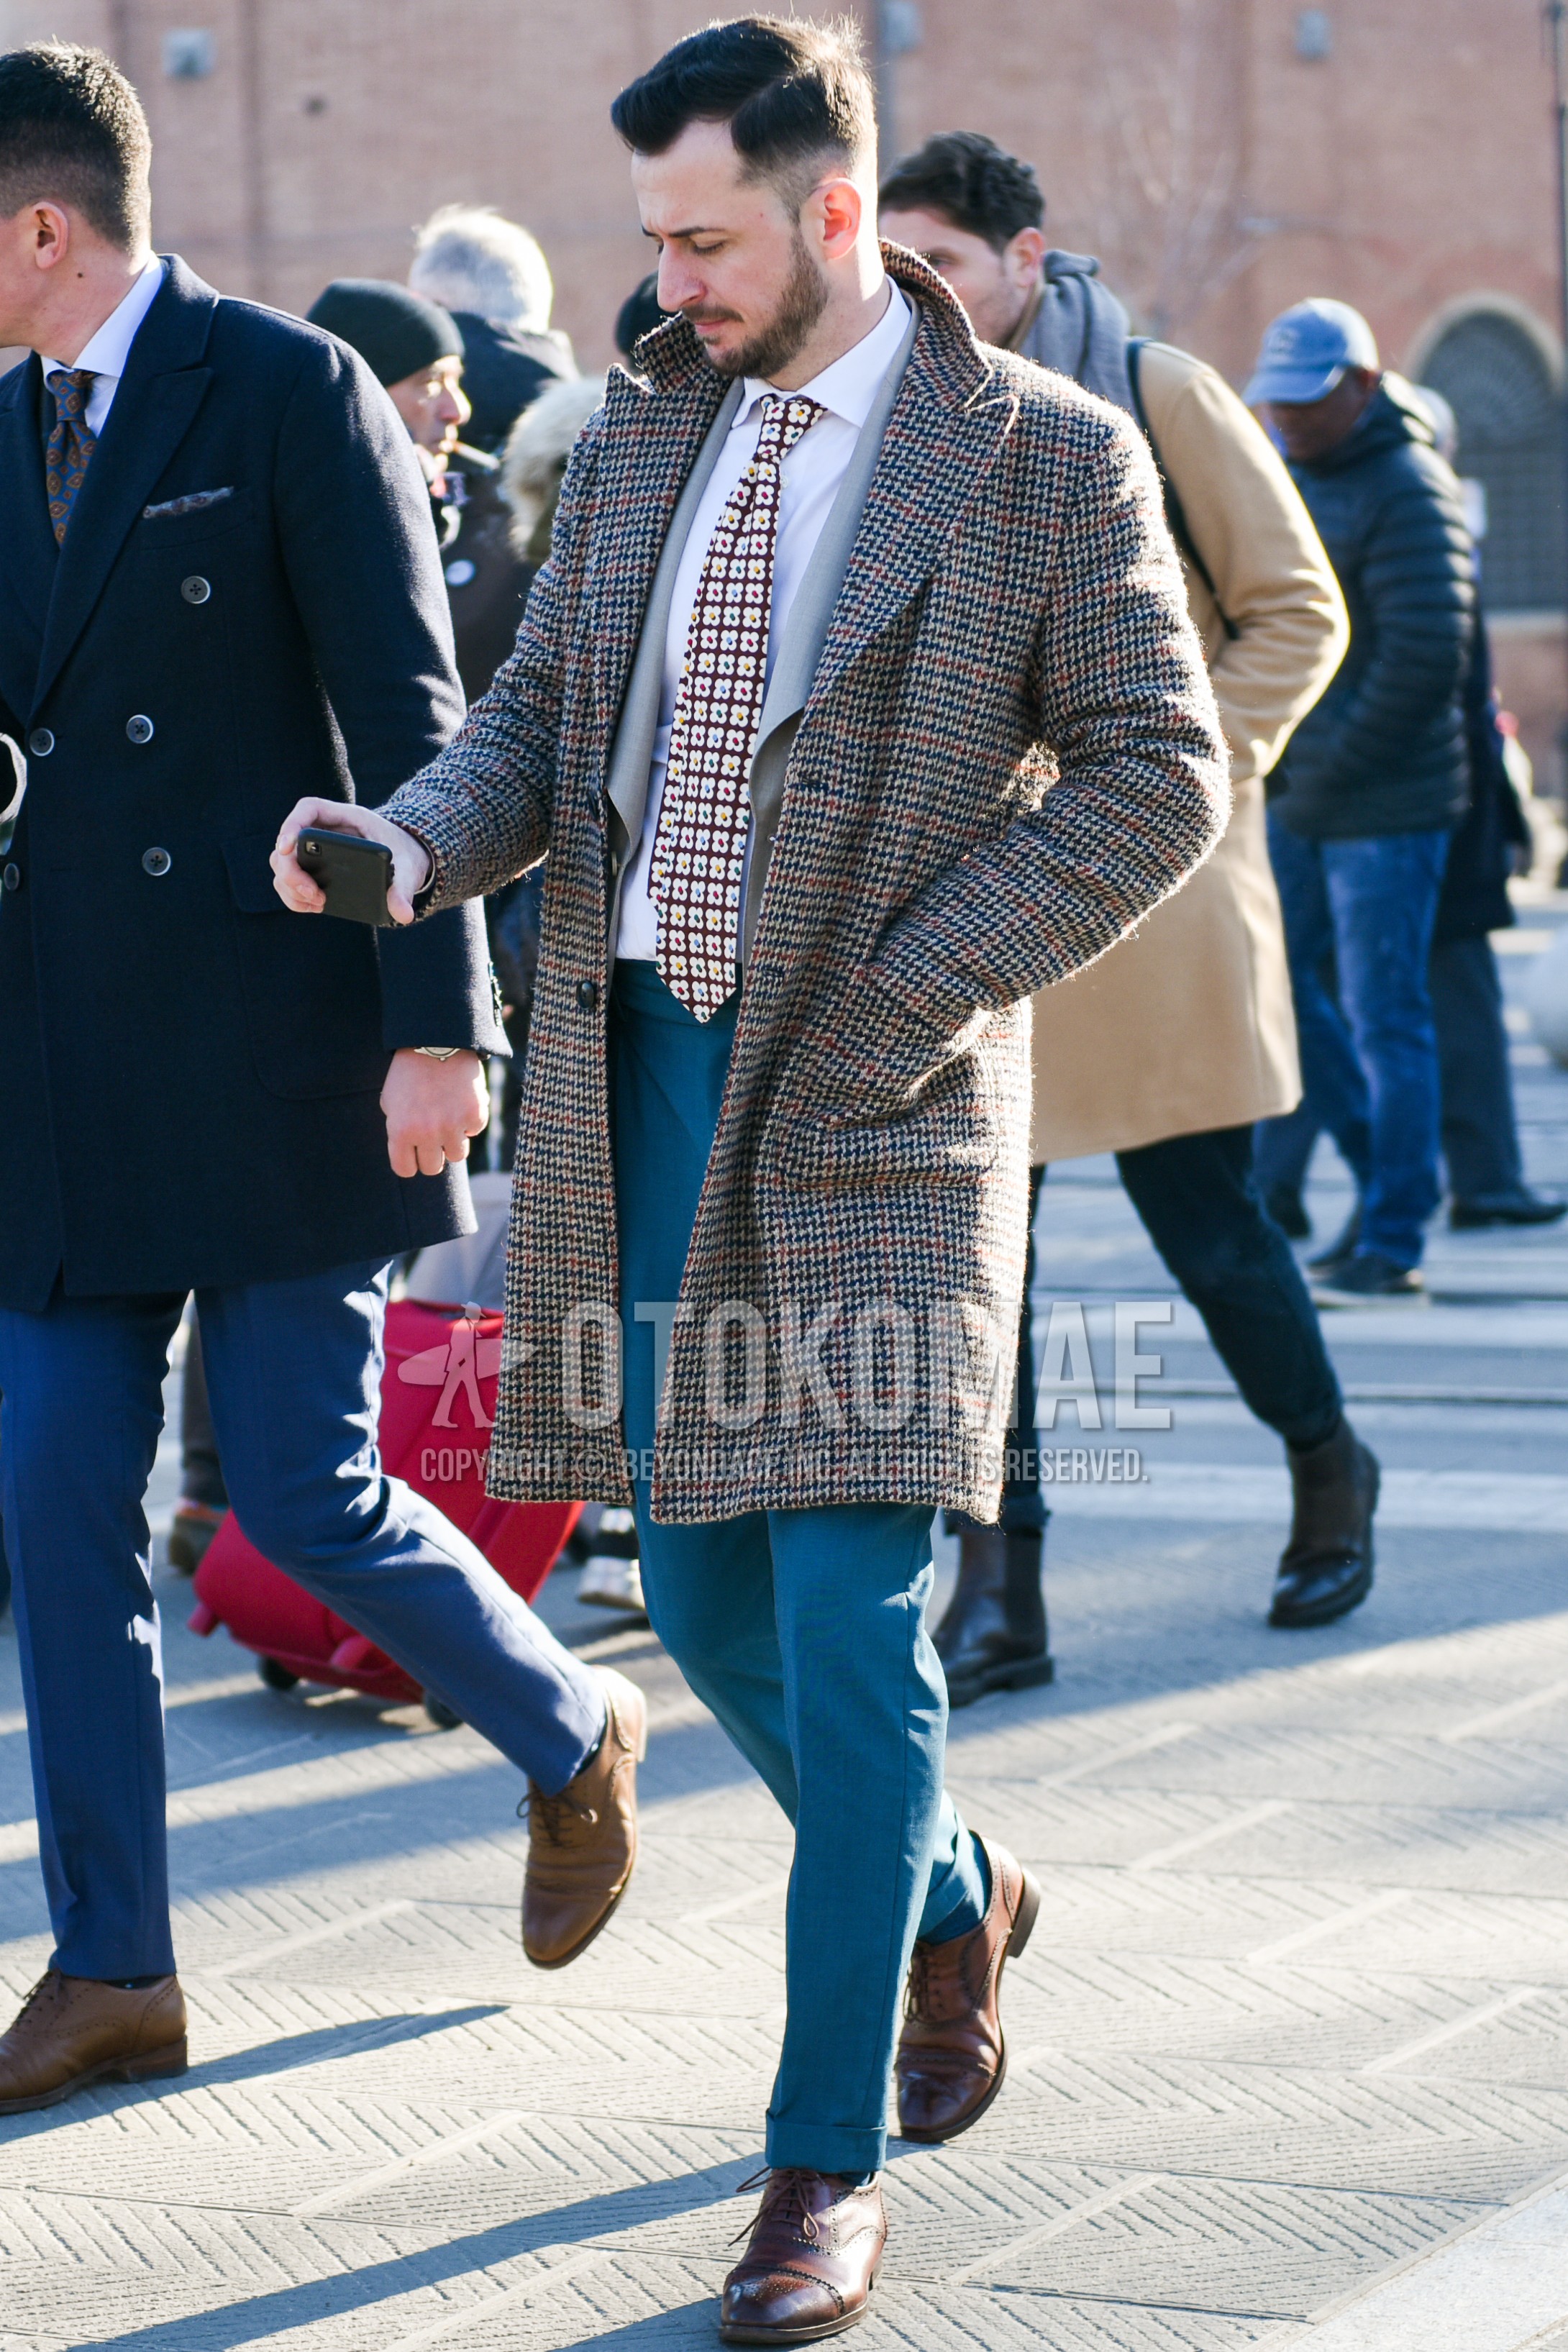 Men's autumn winter outfit with gray check chester coat, white plain shirt, gray plain tailored jacket, gray plain slacks, brown brogue shoes leather shoes, brown necktie necktie.